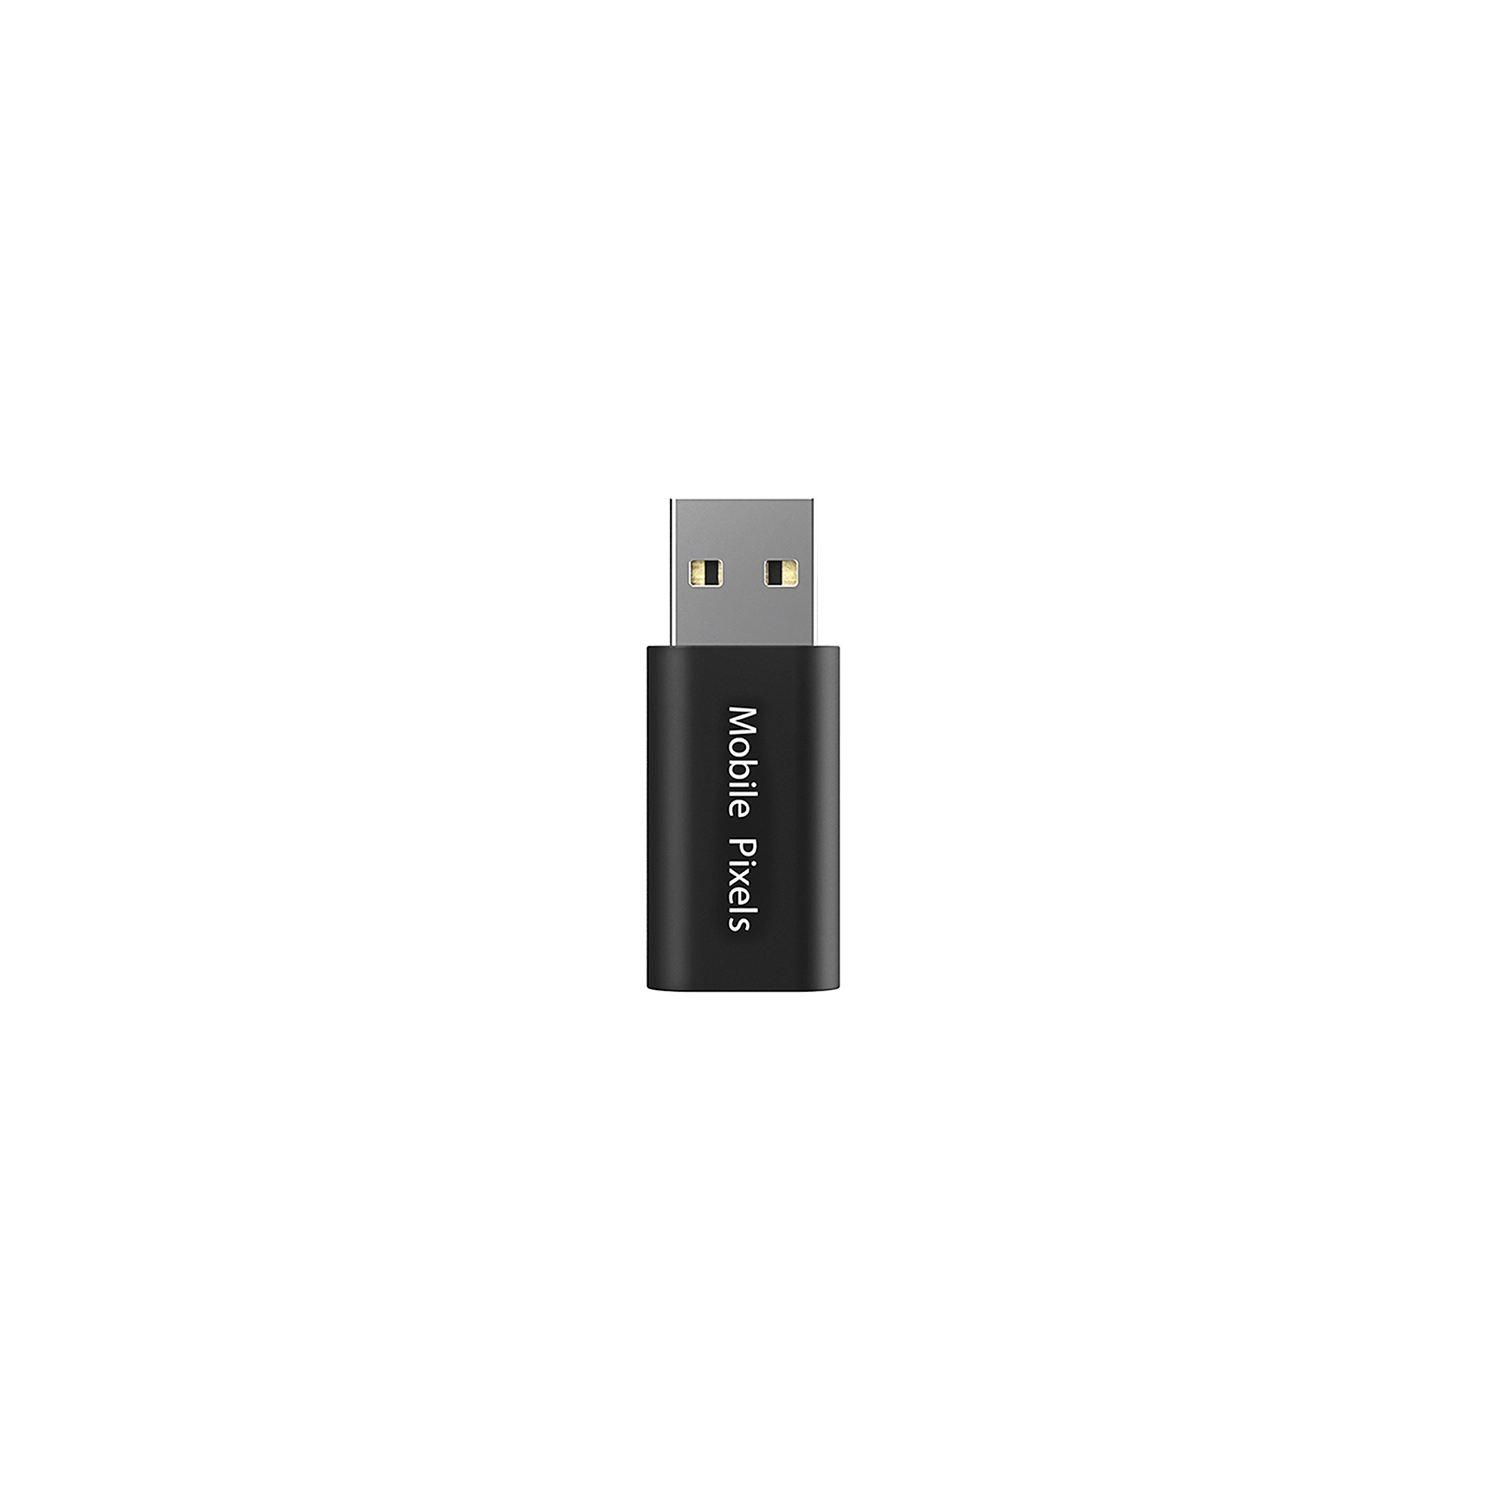 USB-A 转 C 转接头